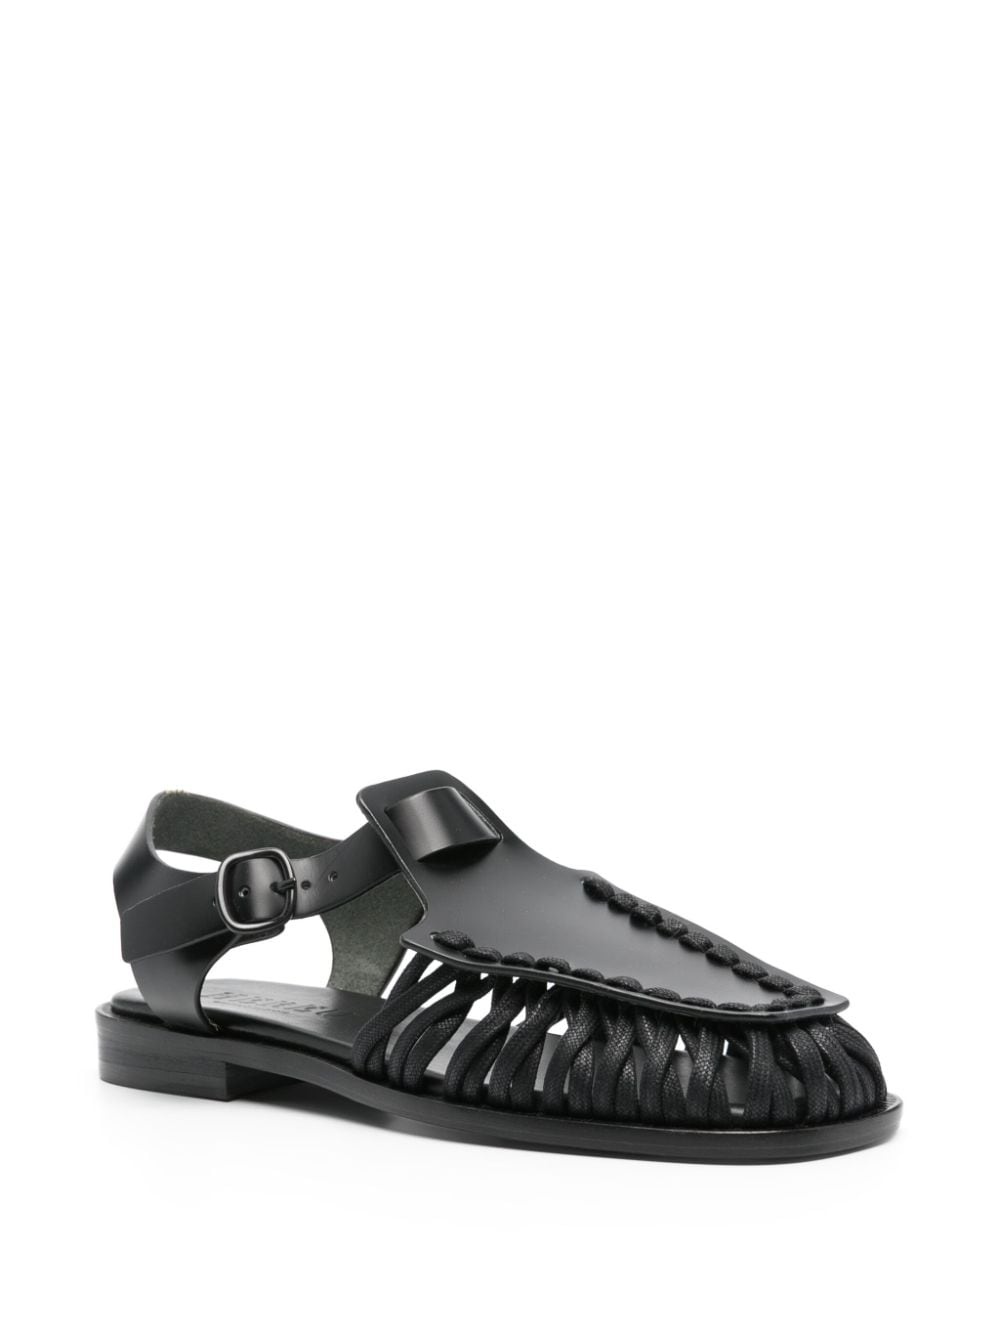 Alaro leather sandals - 2